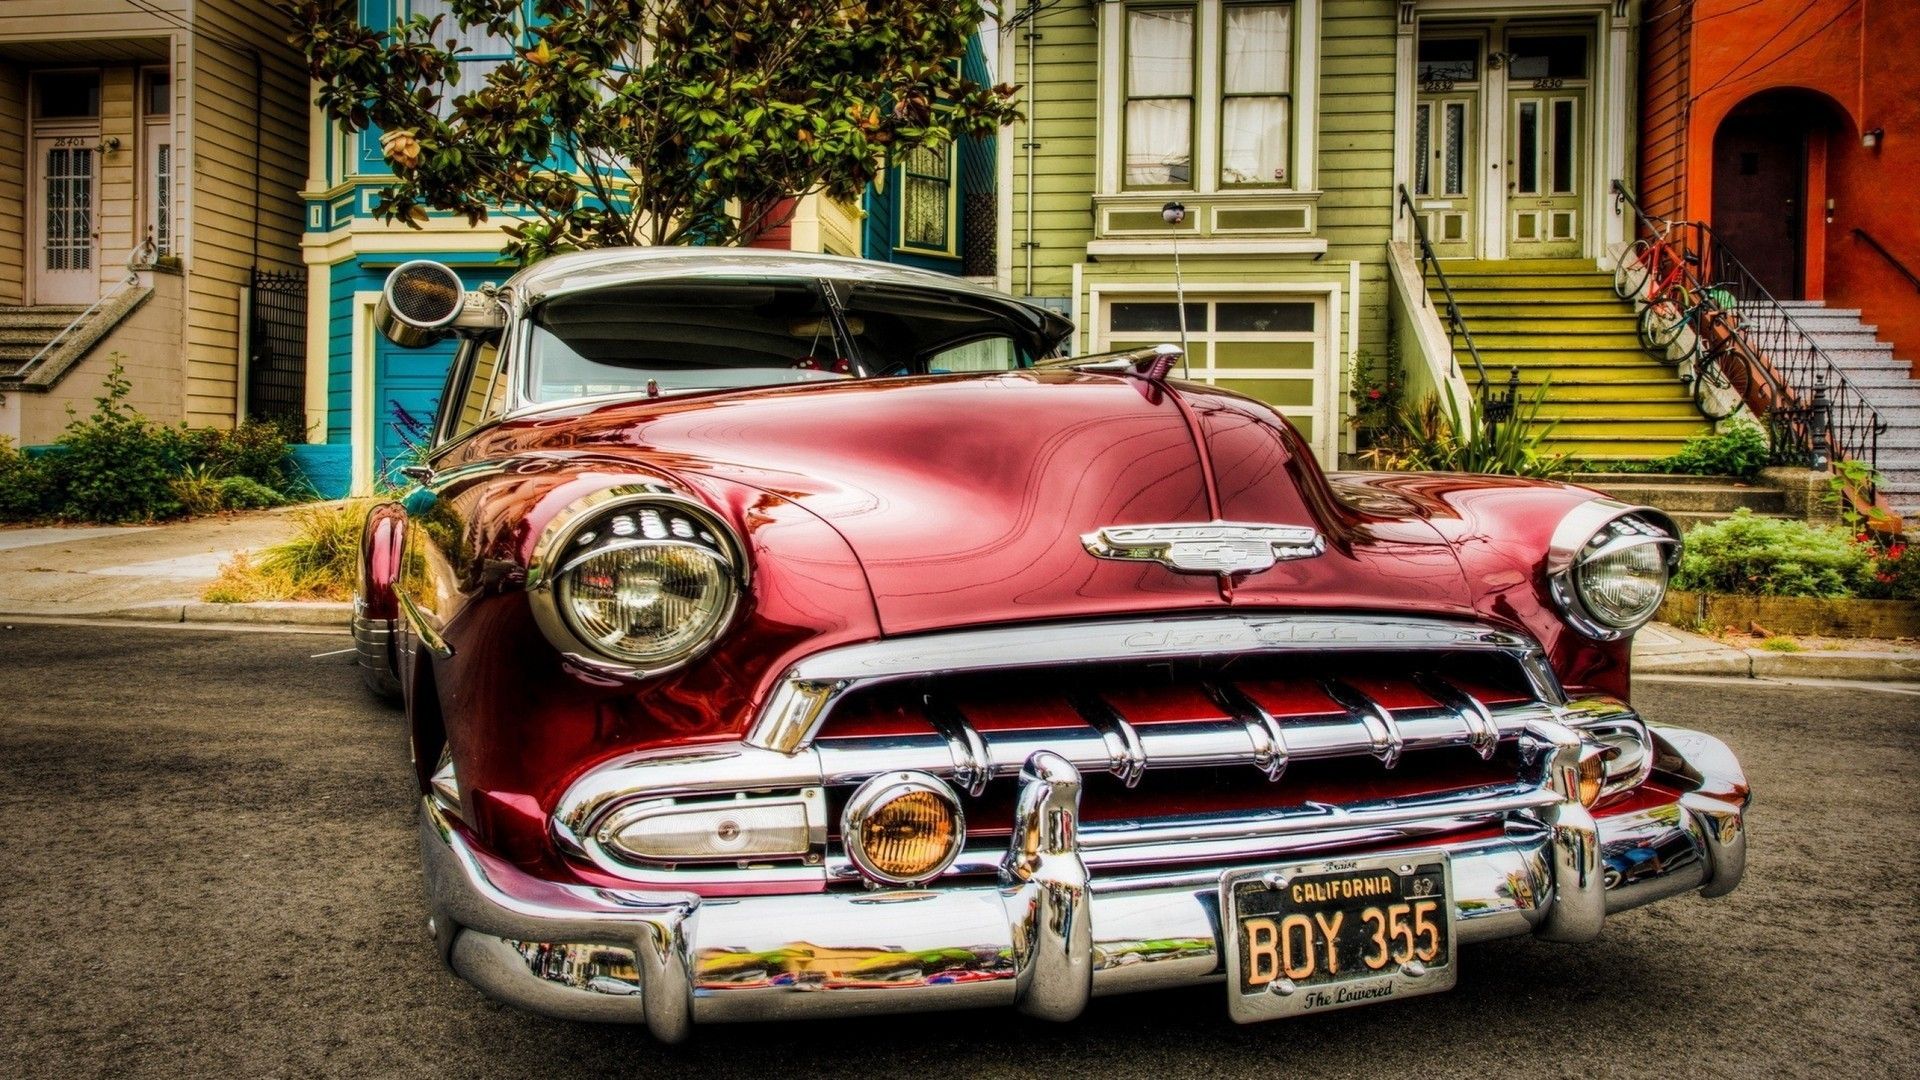 Chevrolet, Vintage, Car, Oldtimer, Red Cars, Vehicle, Trees, House